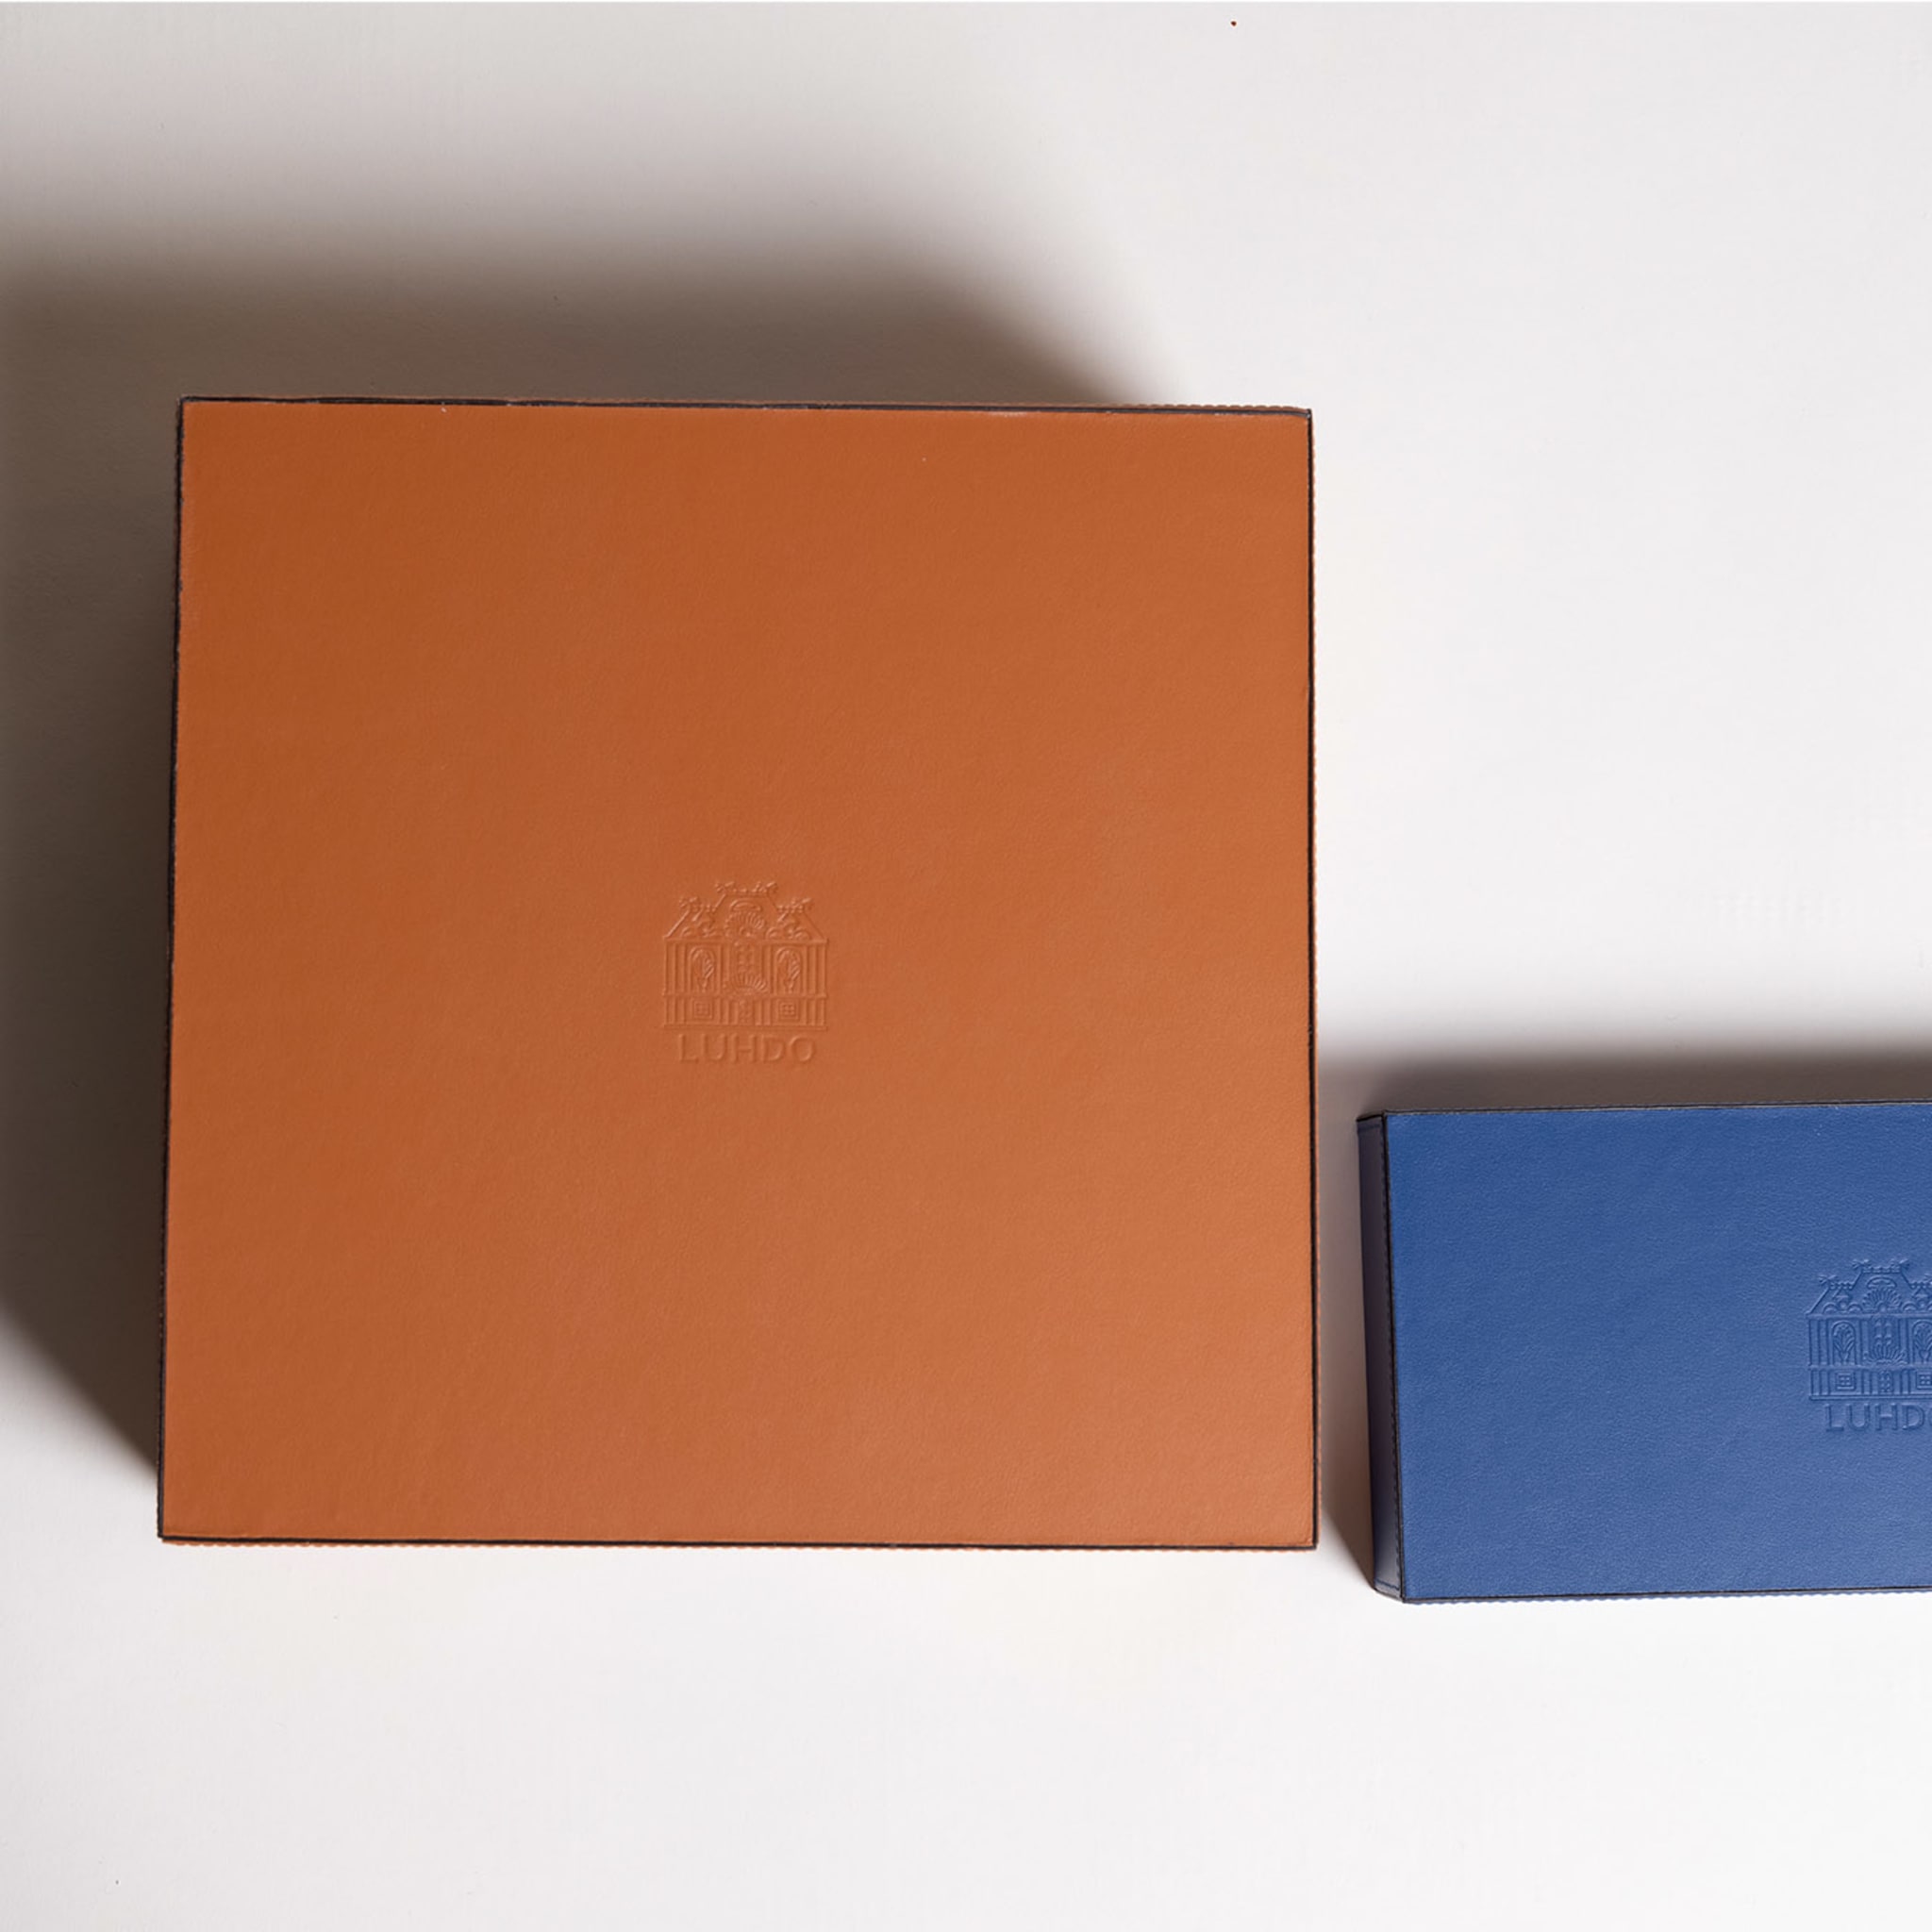 Intarsio Briolette Pecan and Ocean Blue Duo Box - Alternative view 2